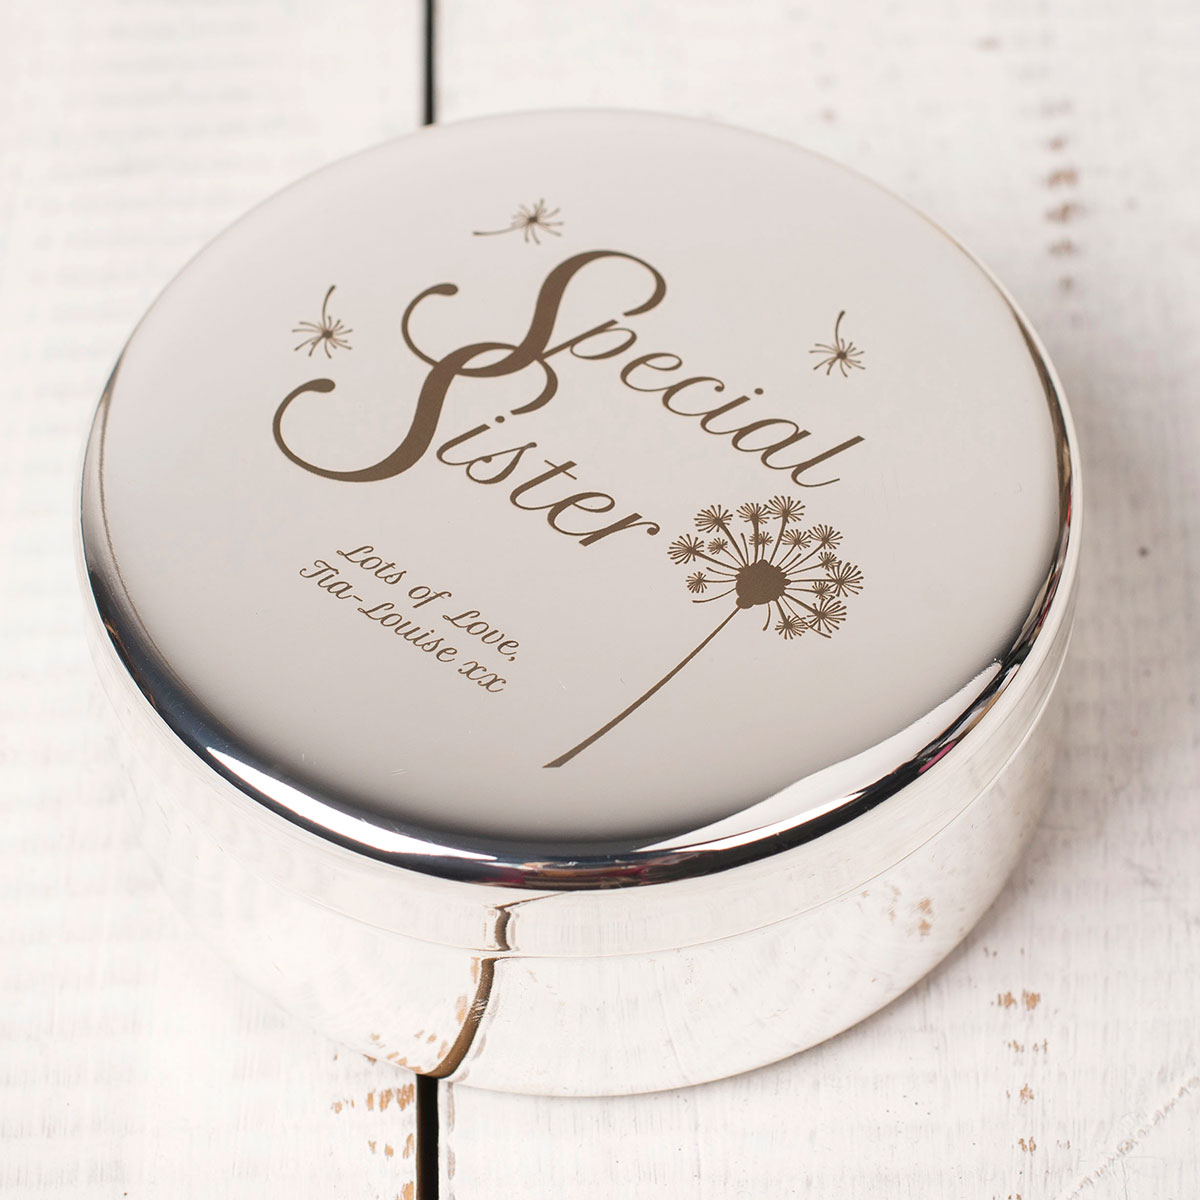 Engraved Circular Trinket Box - Special Sister